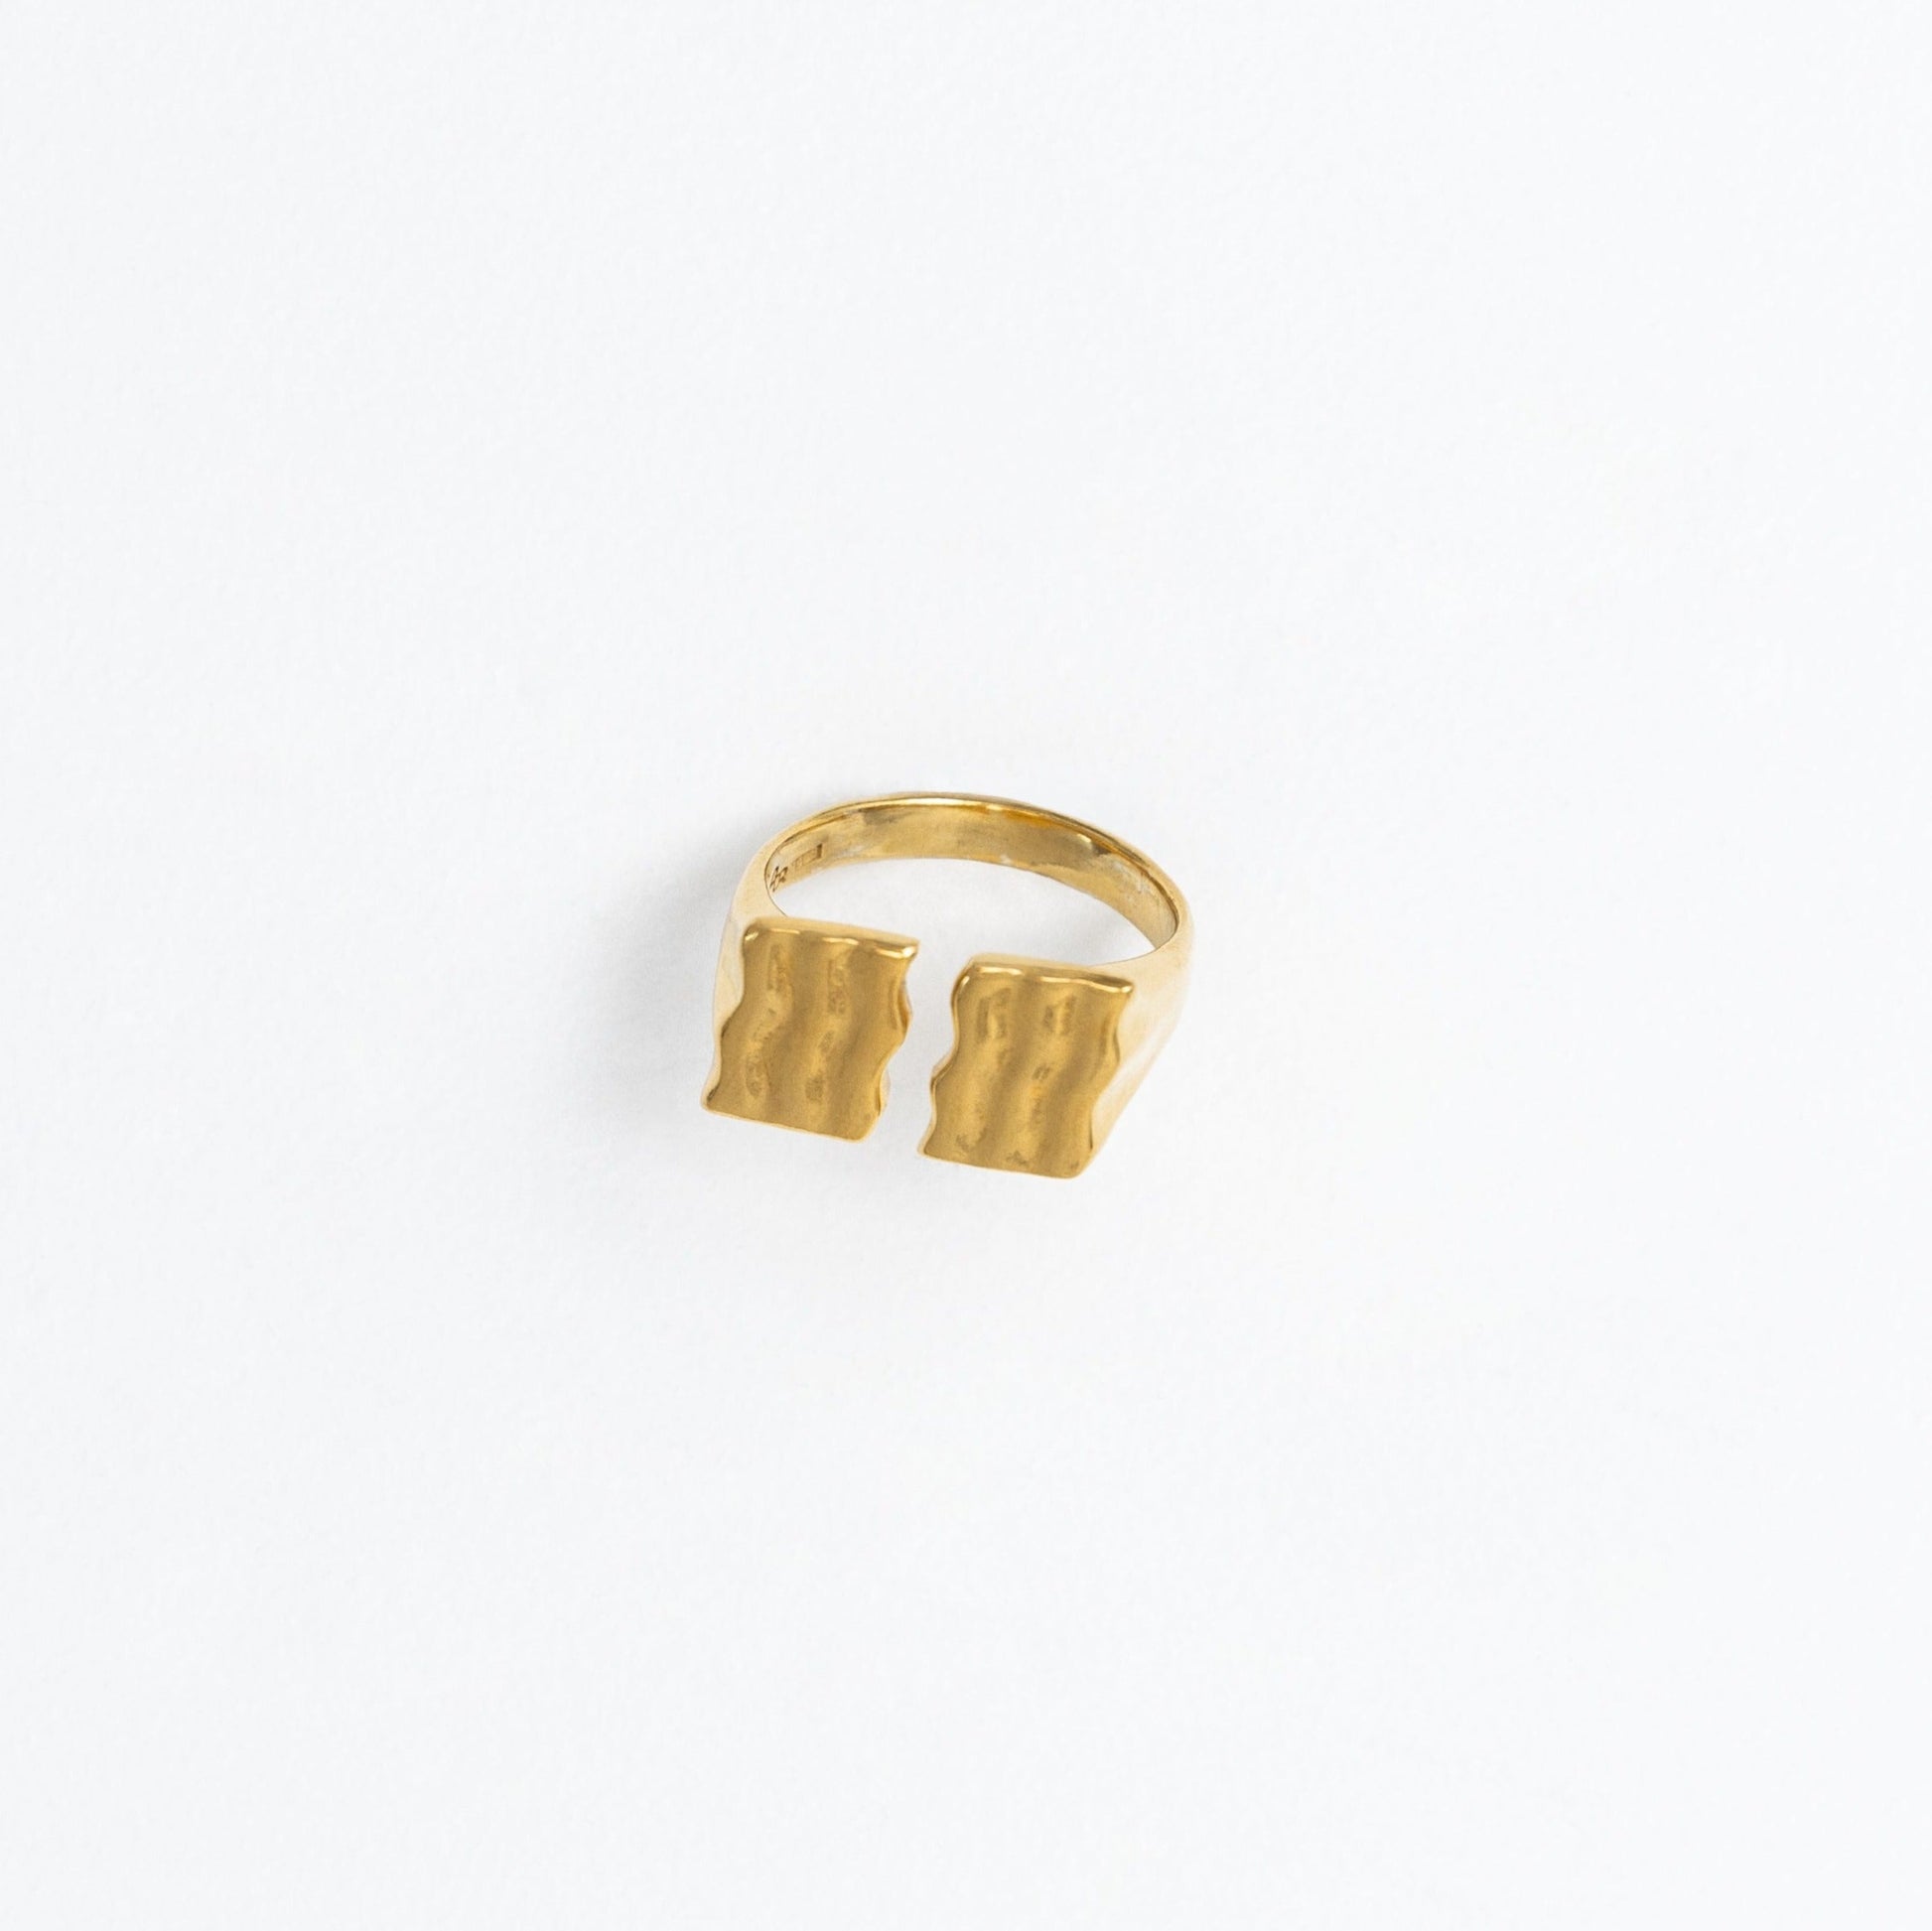 Adjustable gold ring